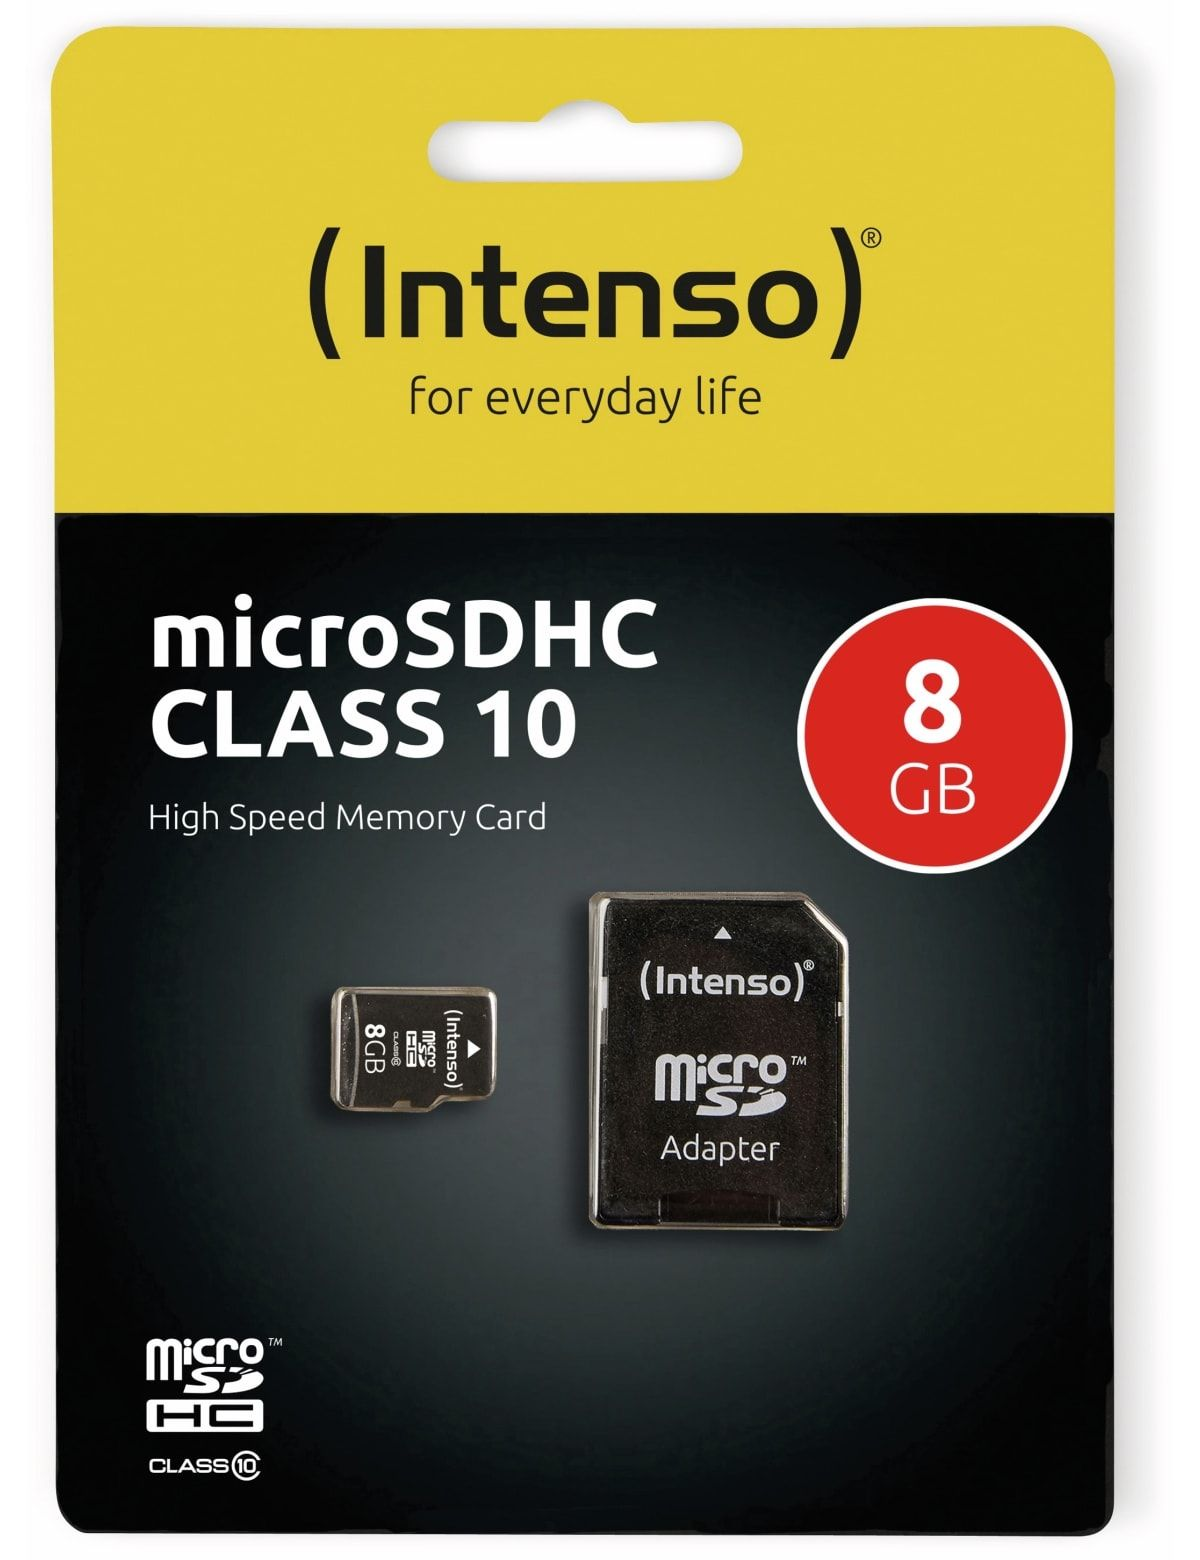 INTENSO MicroSD Micro-SD 8 GB, SDHC, Card 10 12 Class 8GB MB/s Speicherkarte